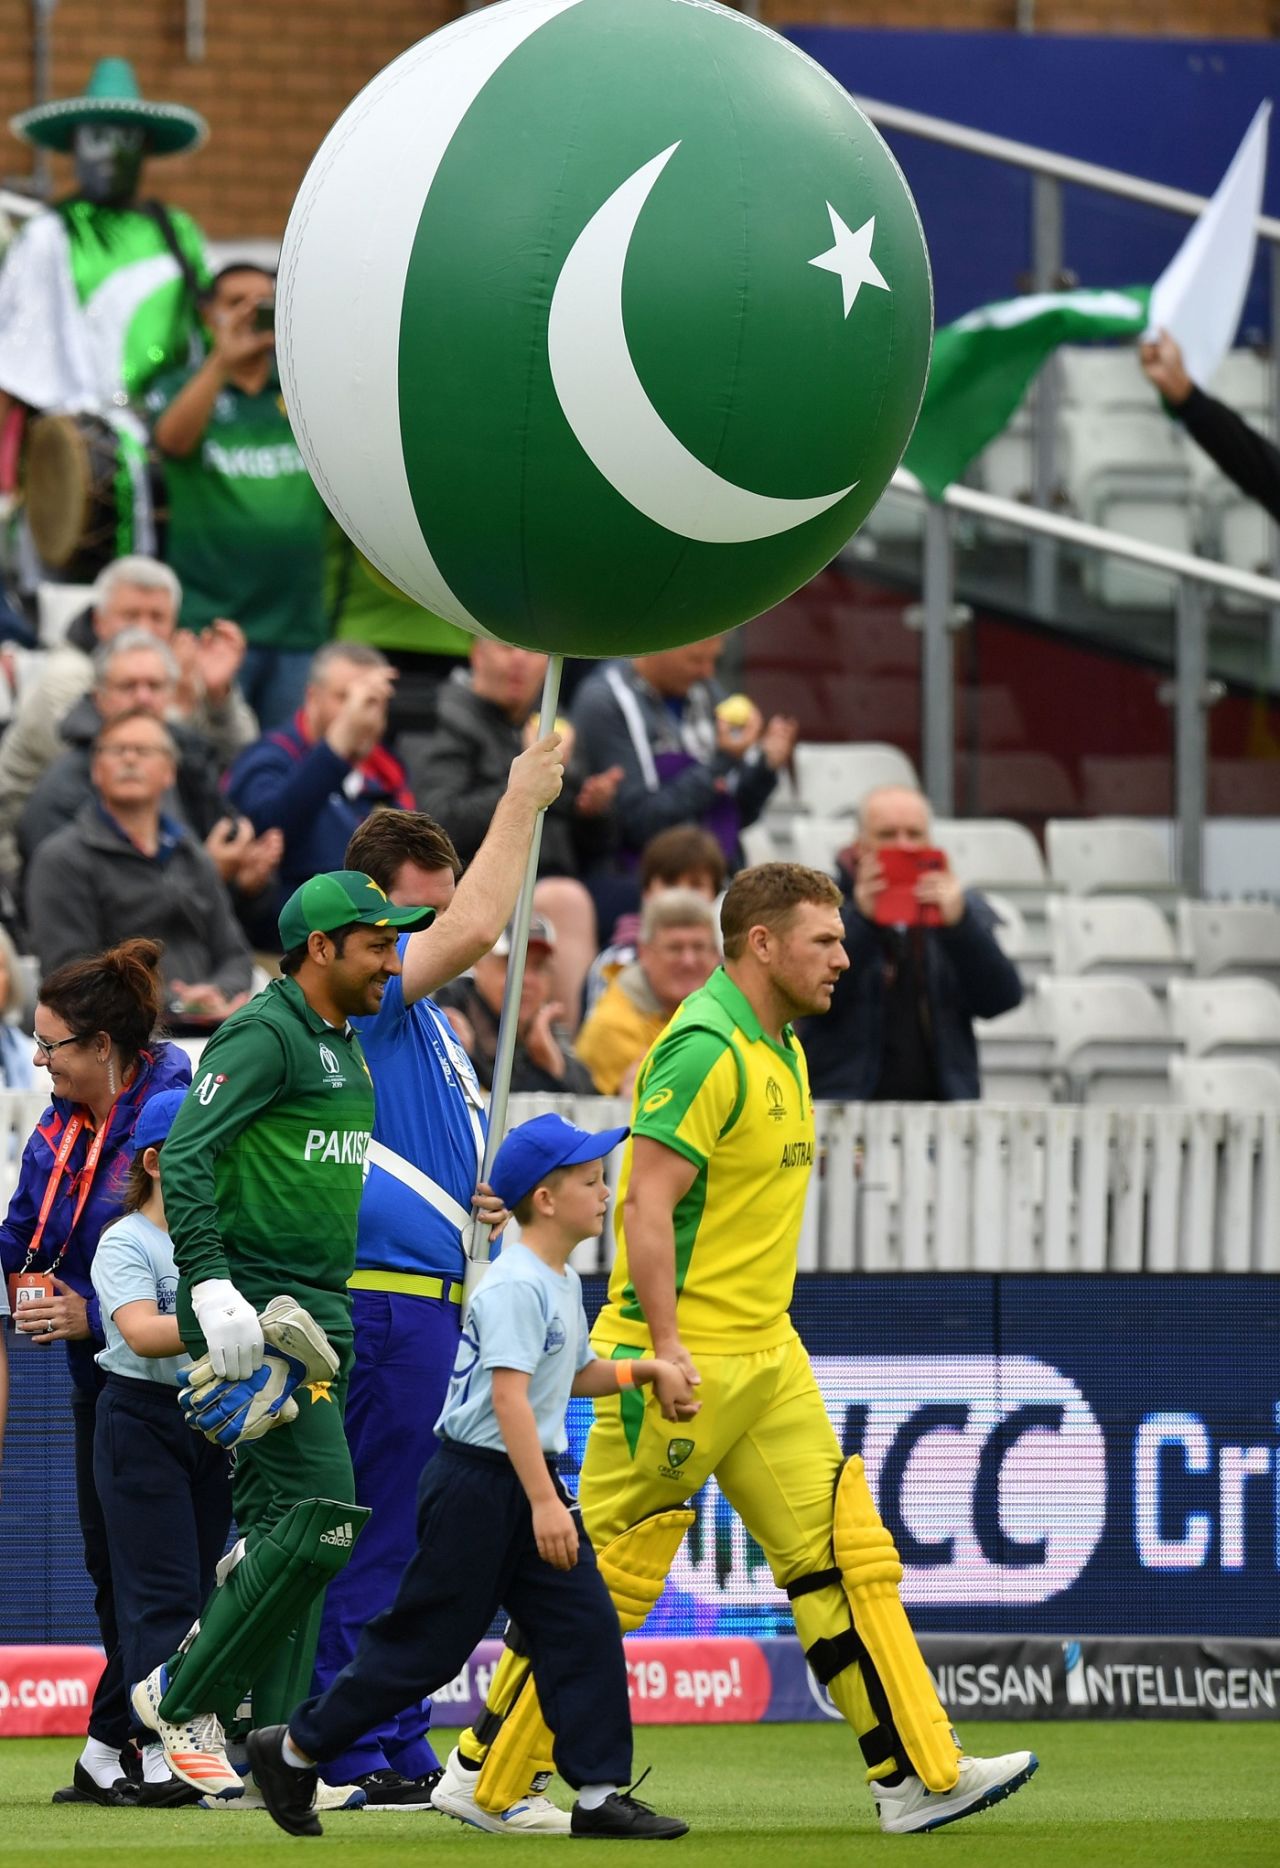 Sarfaraz Ahmed and Aaron Finch lead their teams onto the field, Australia v Pakistan, World Cup 2019, Taunton, June 12, 2019